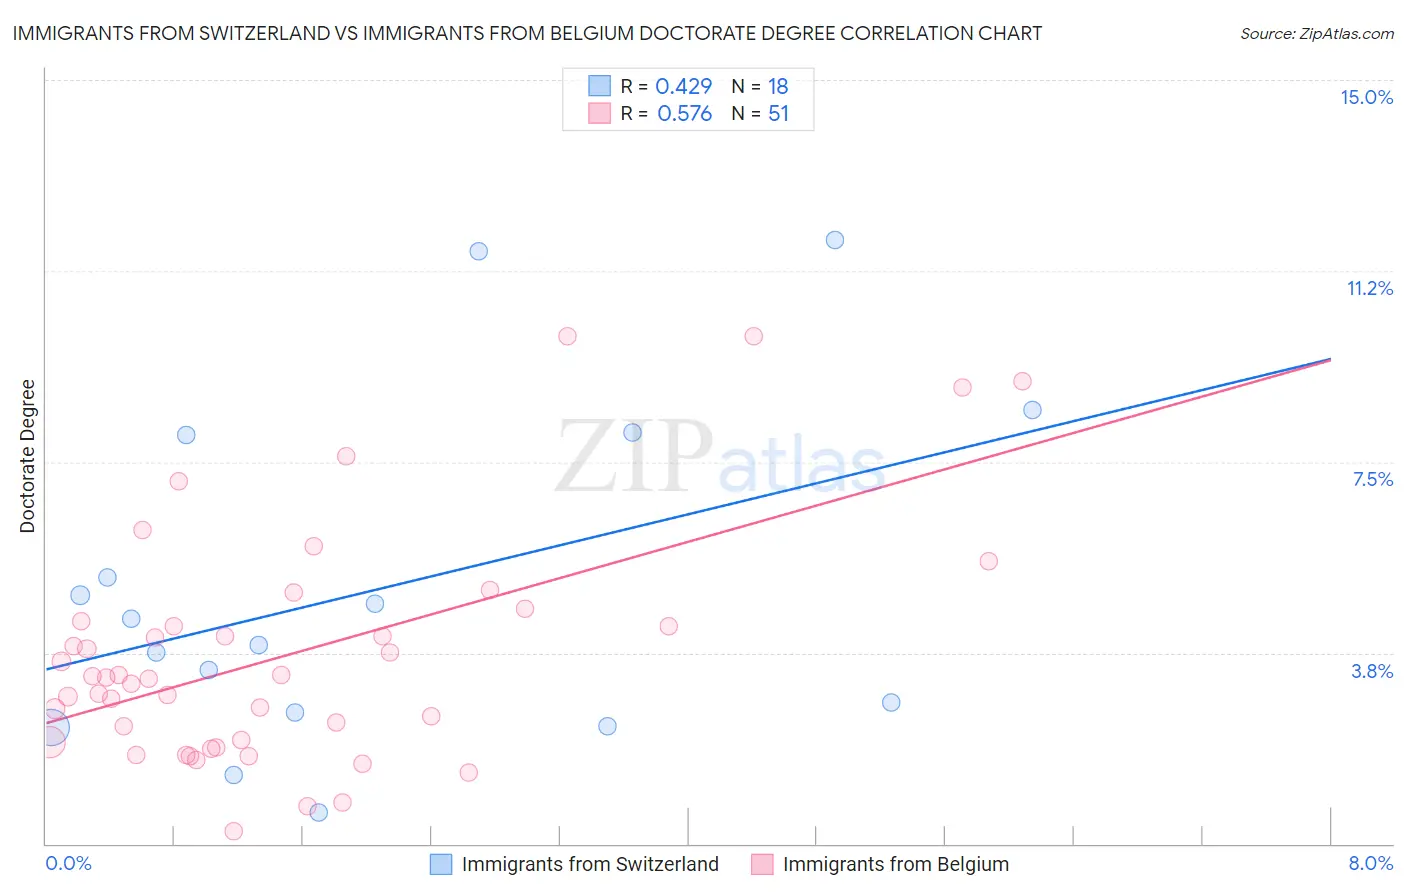 Immigrants from Switzerland vs Immigrants from Belgium Doctorate Degree